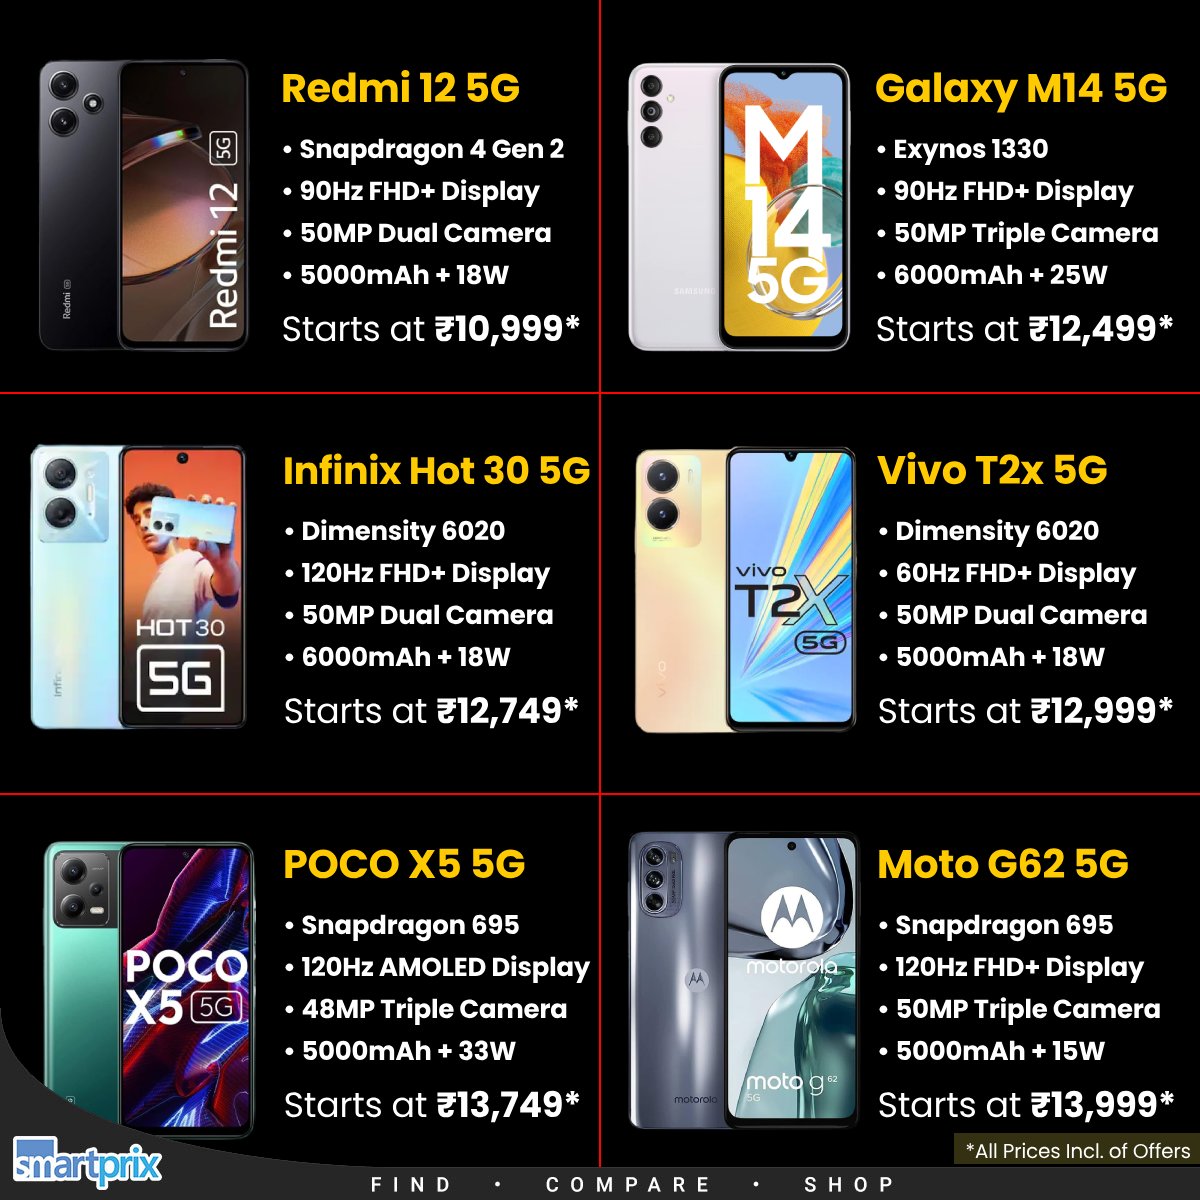 Best 5G Smartphones Under Rs 15,000  smpx.to/miz3M0

#Smartphones #5GRevolution #5G #Redmi125G #GalaxyM14 #InfinixHot30 #VivoT2x #POCOX5 #MotoG62